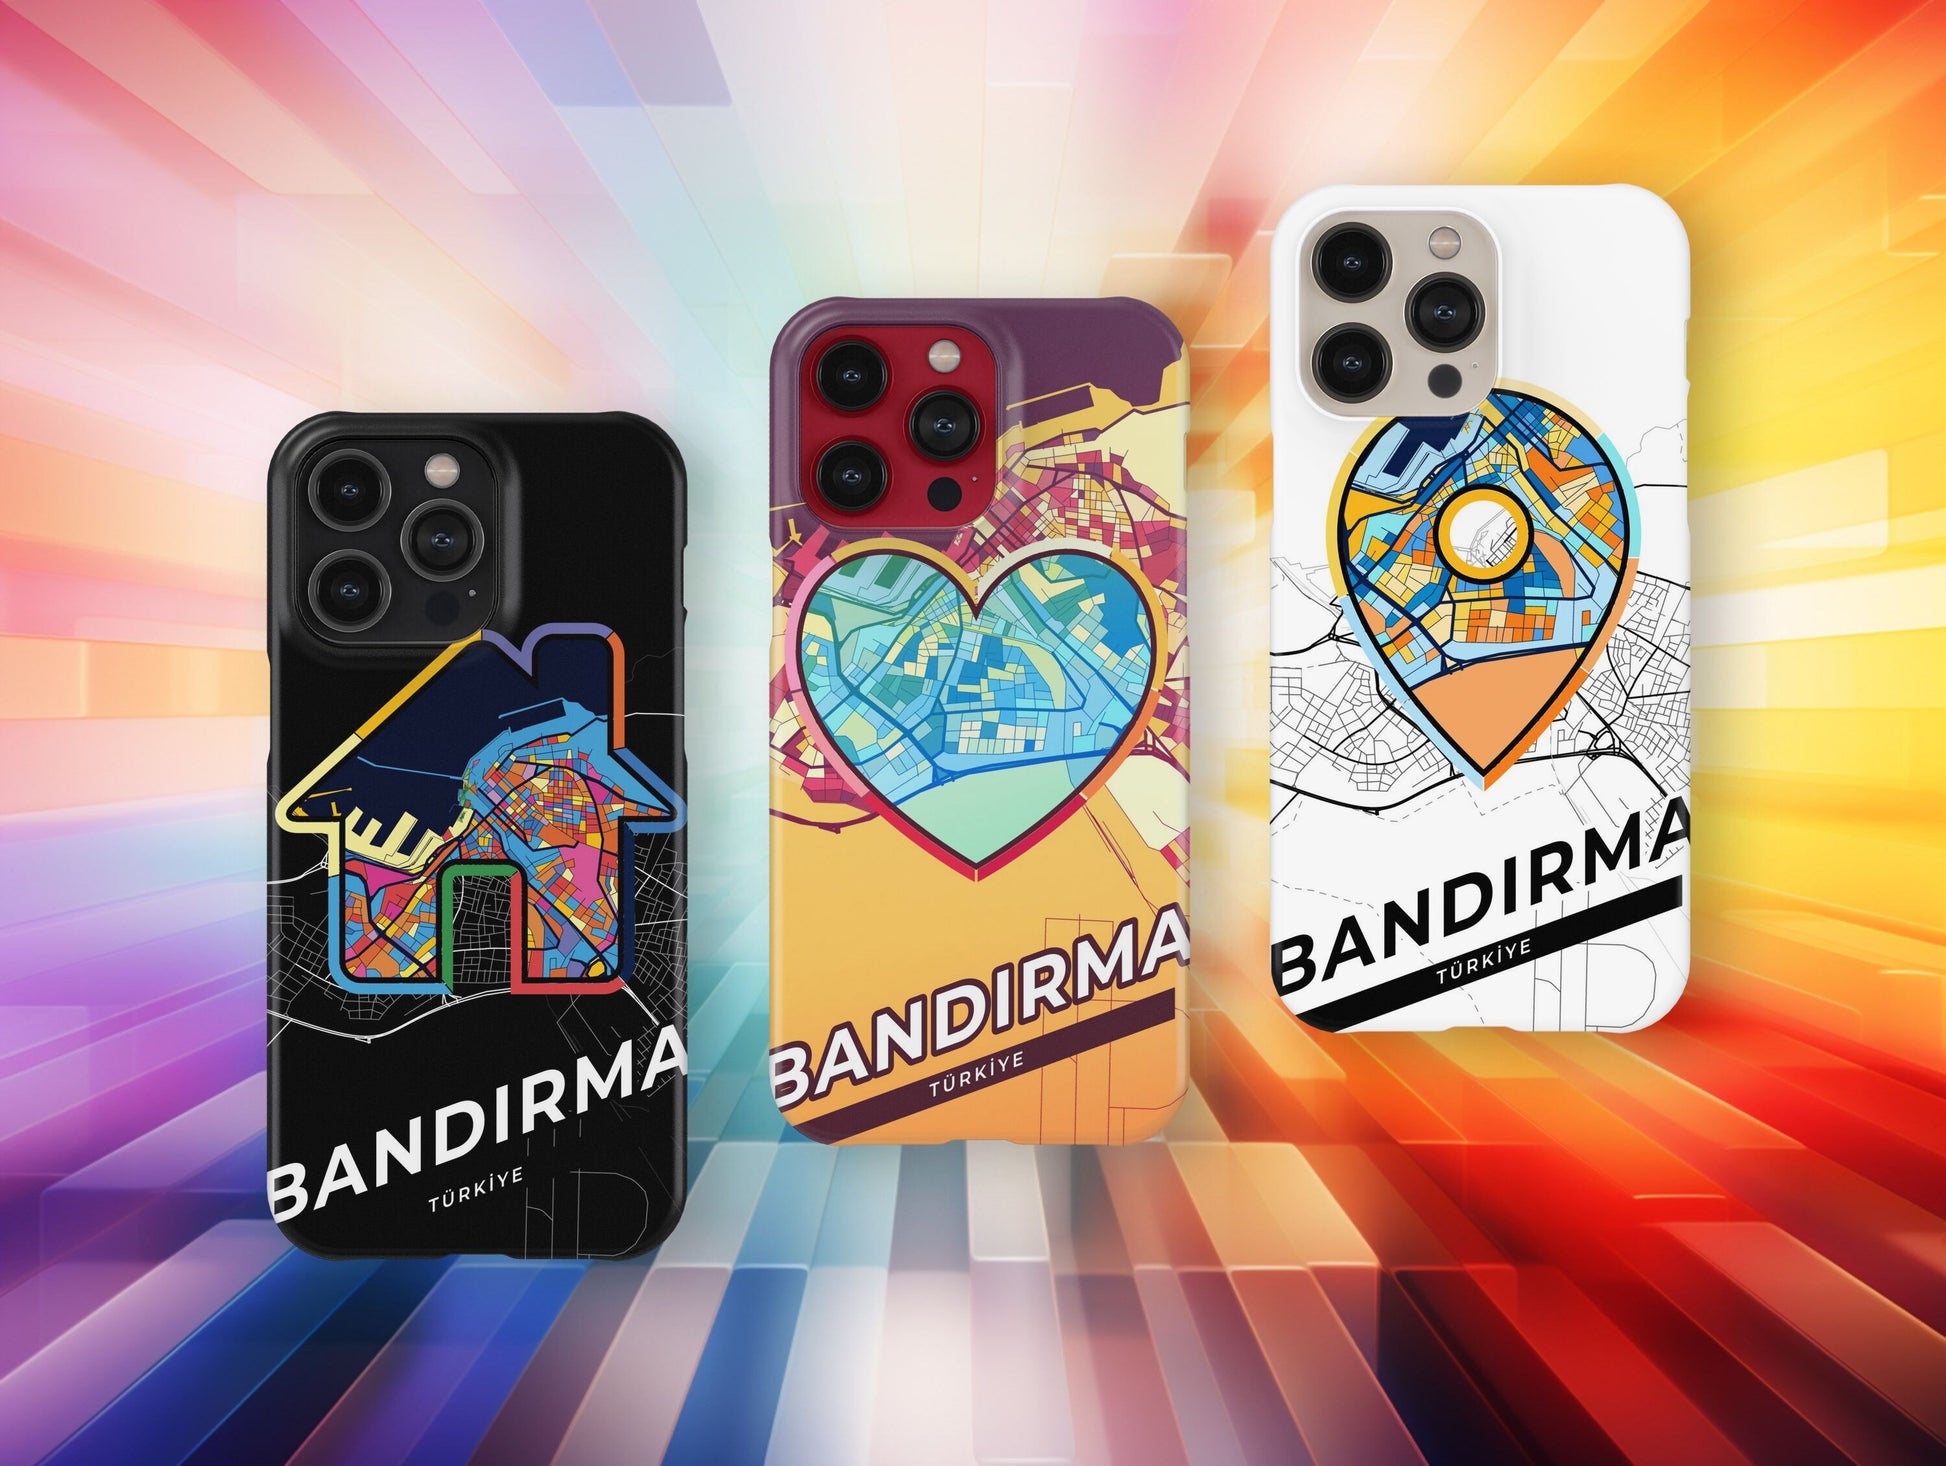 Bandırma Turkey slim phone case with colorful icon. Birthday, wedding or housewarming gift. Couple match cases.